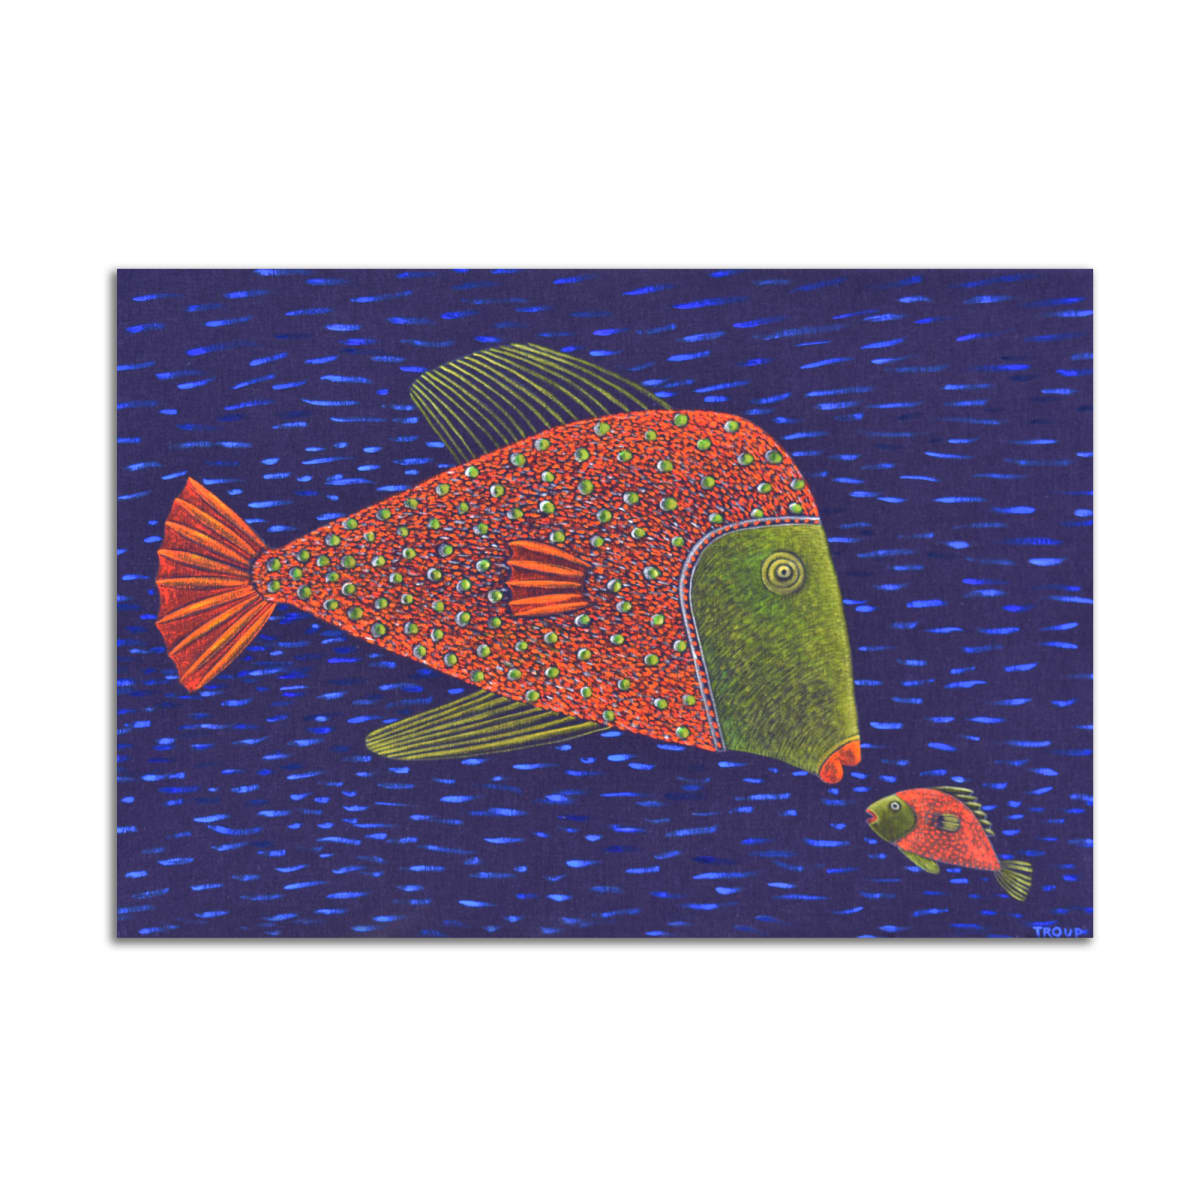 Big Fish Little Fish by Jane Troup 